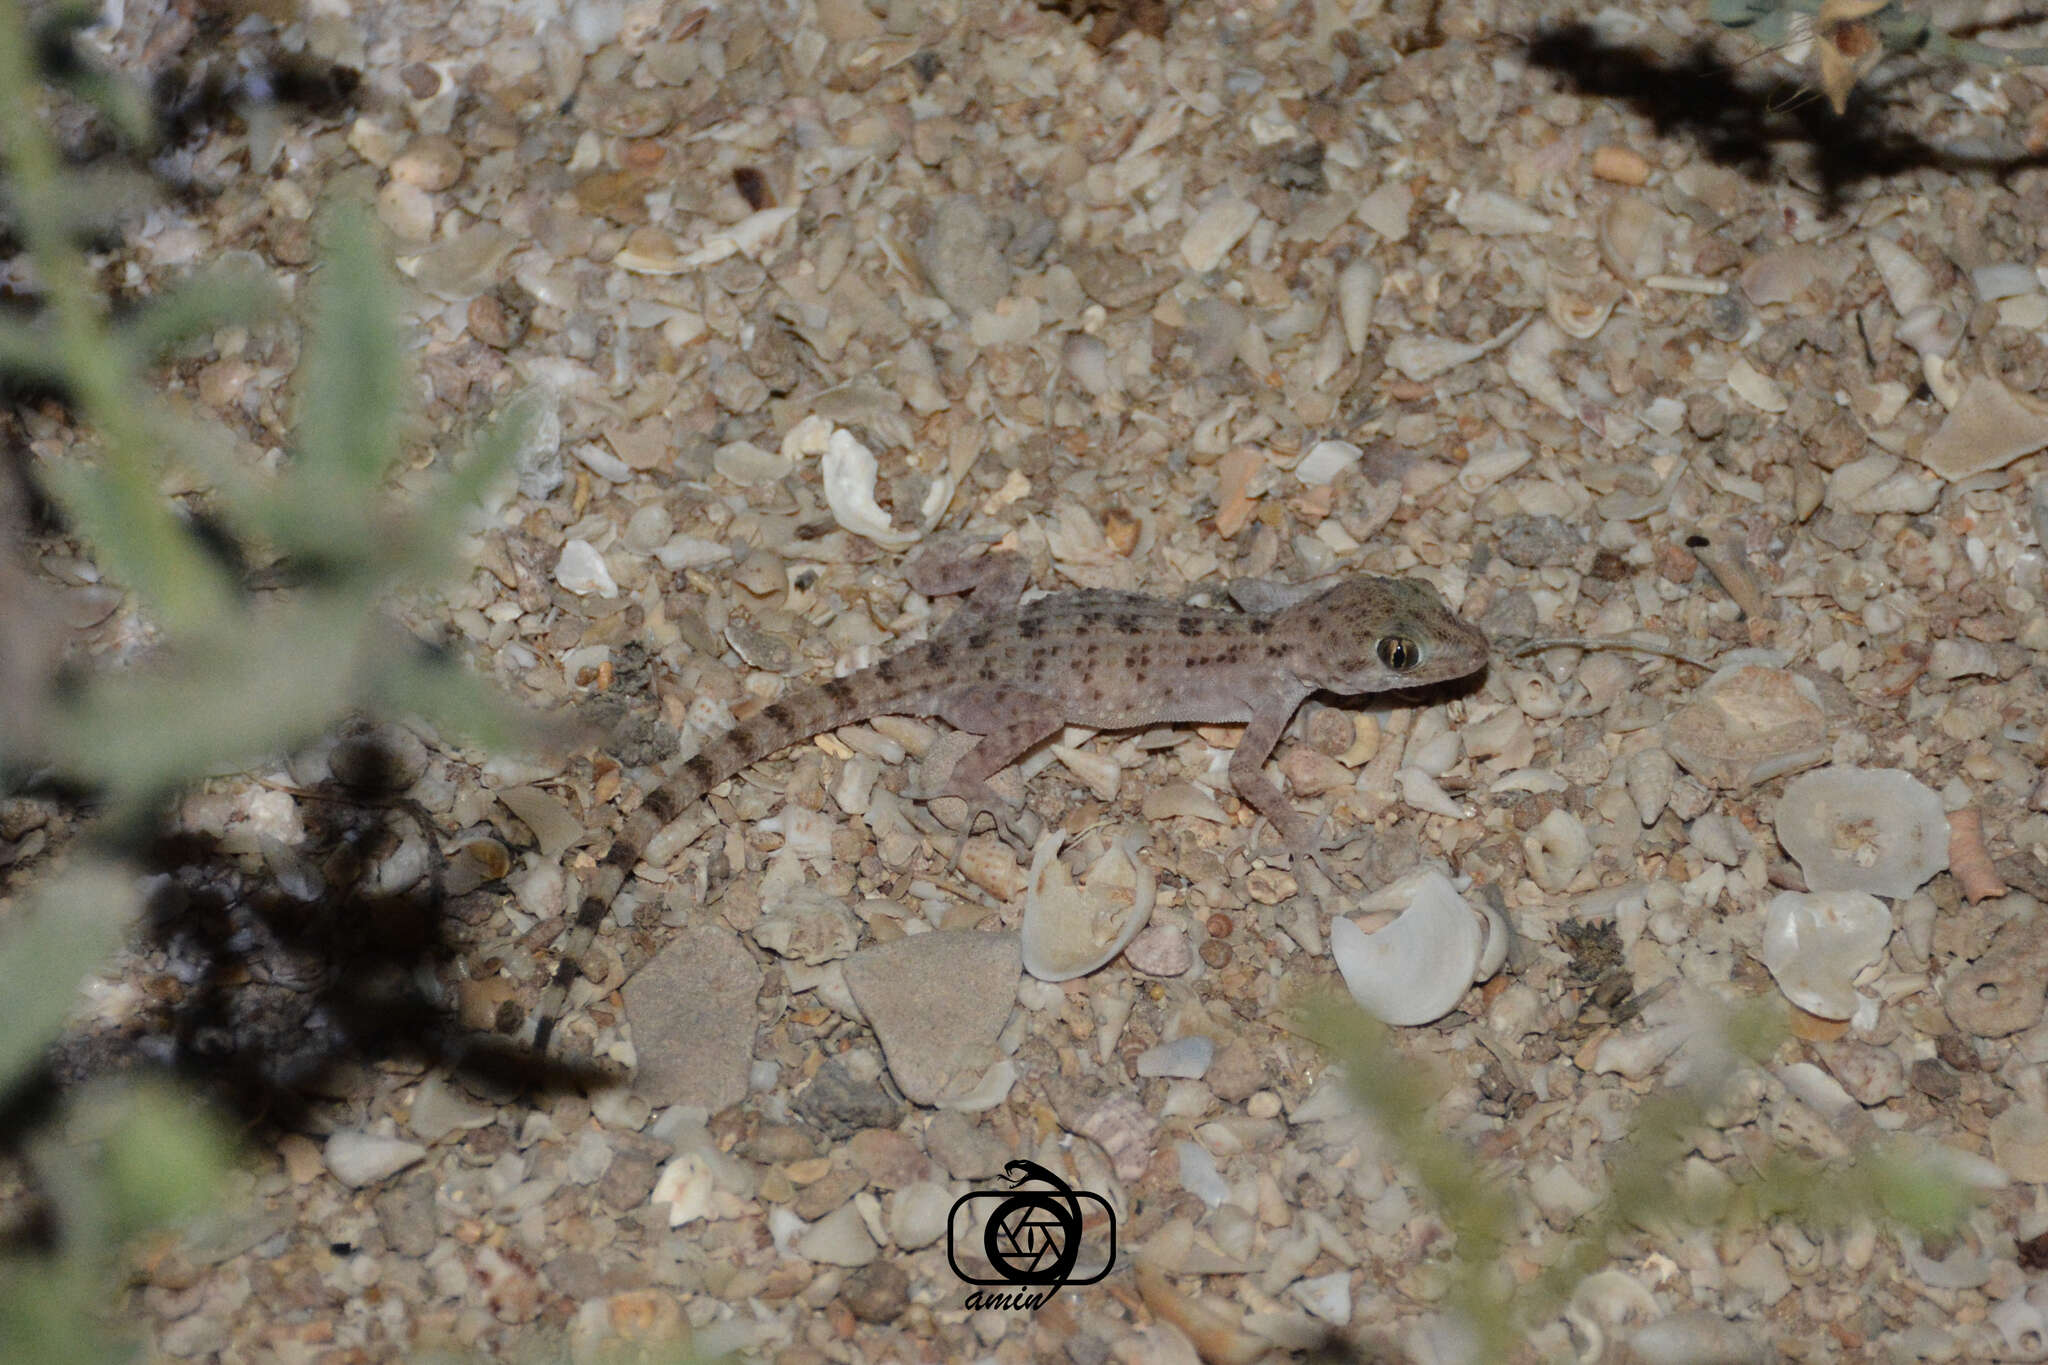 Image of Kachh Gecko